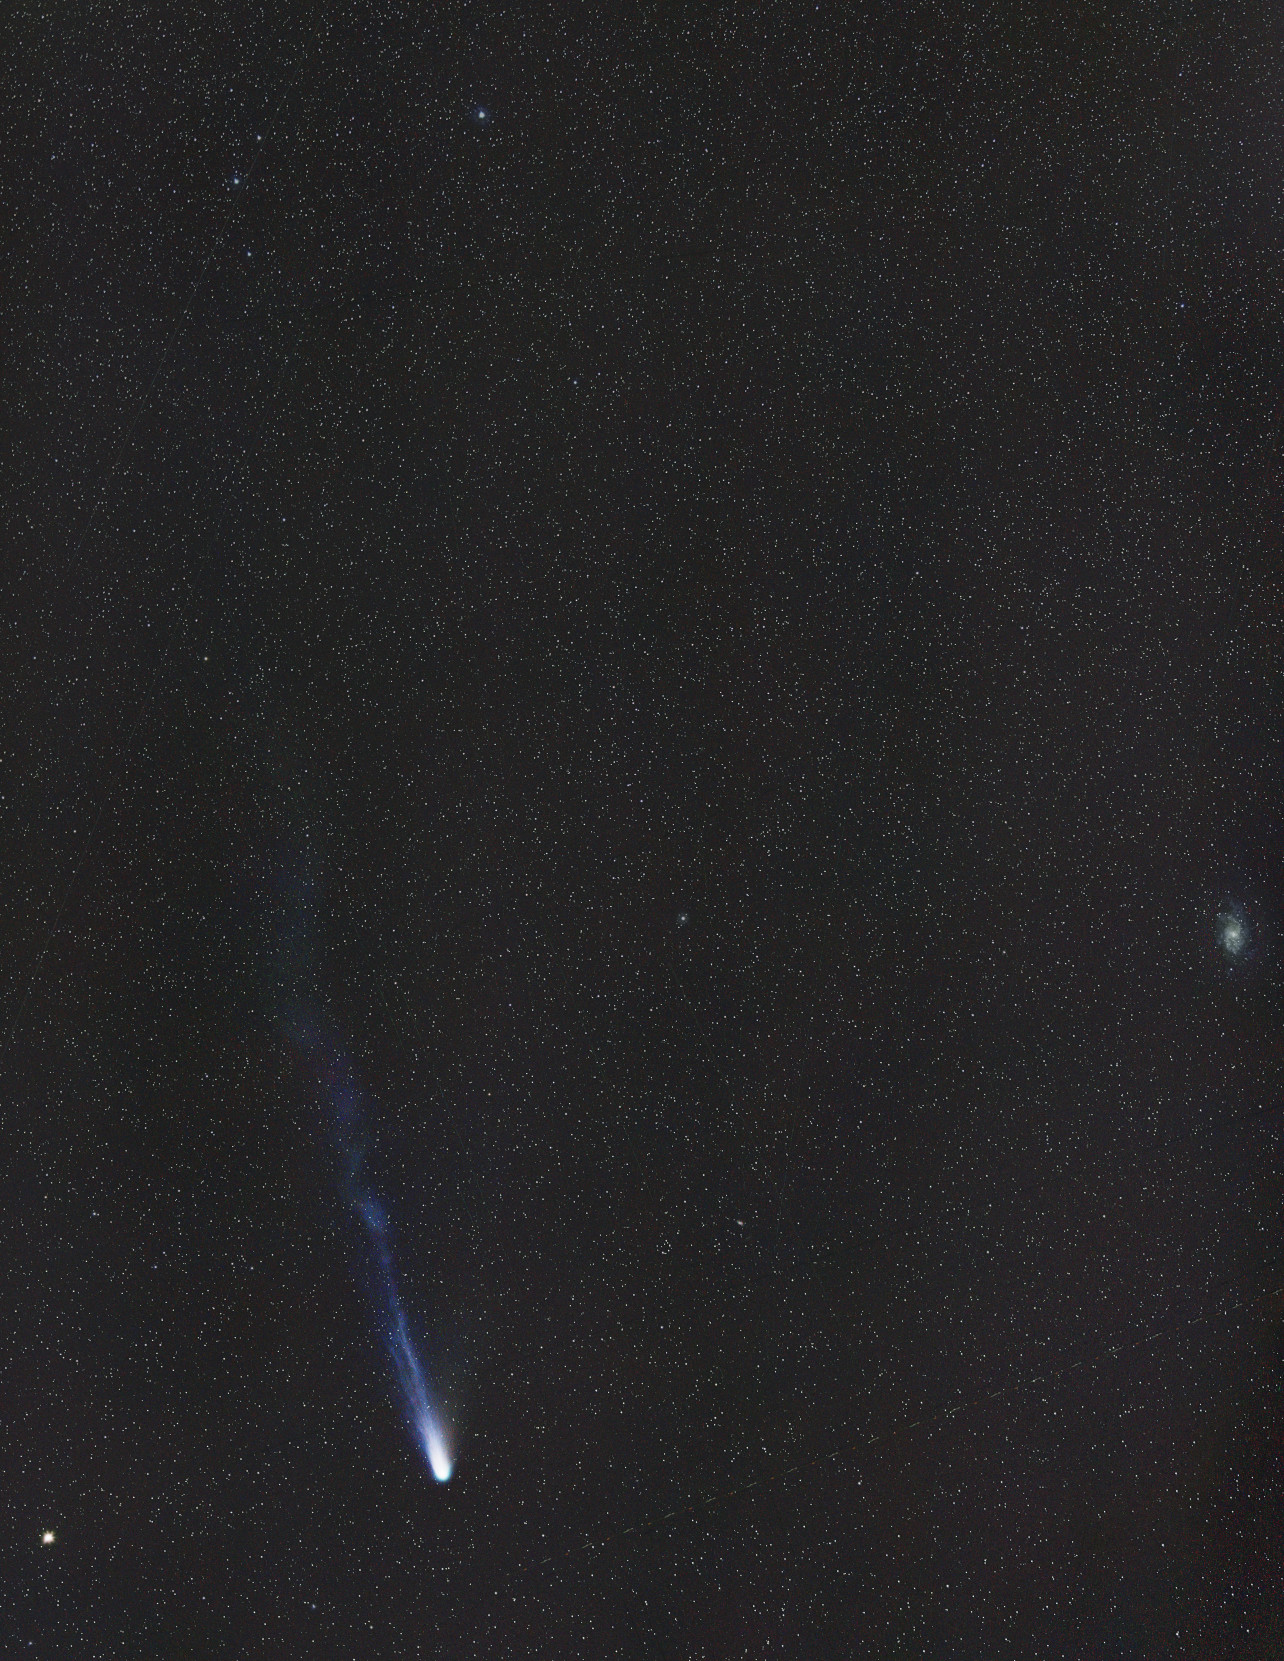 Komet 12p Pons-Brooks bei M33 M 33